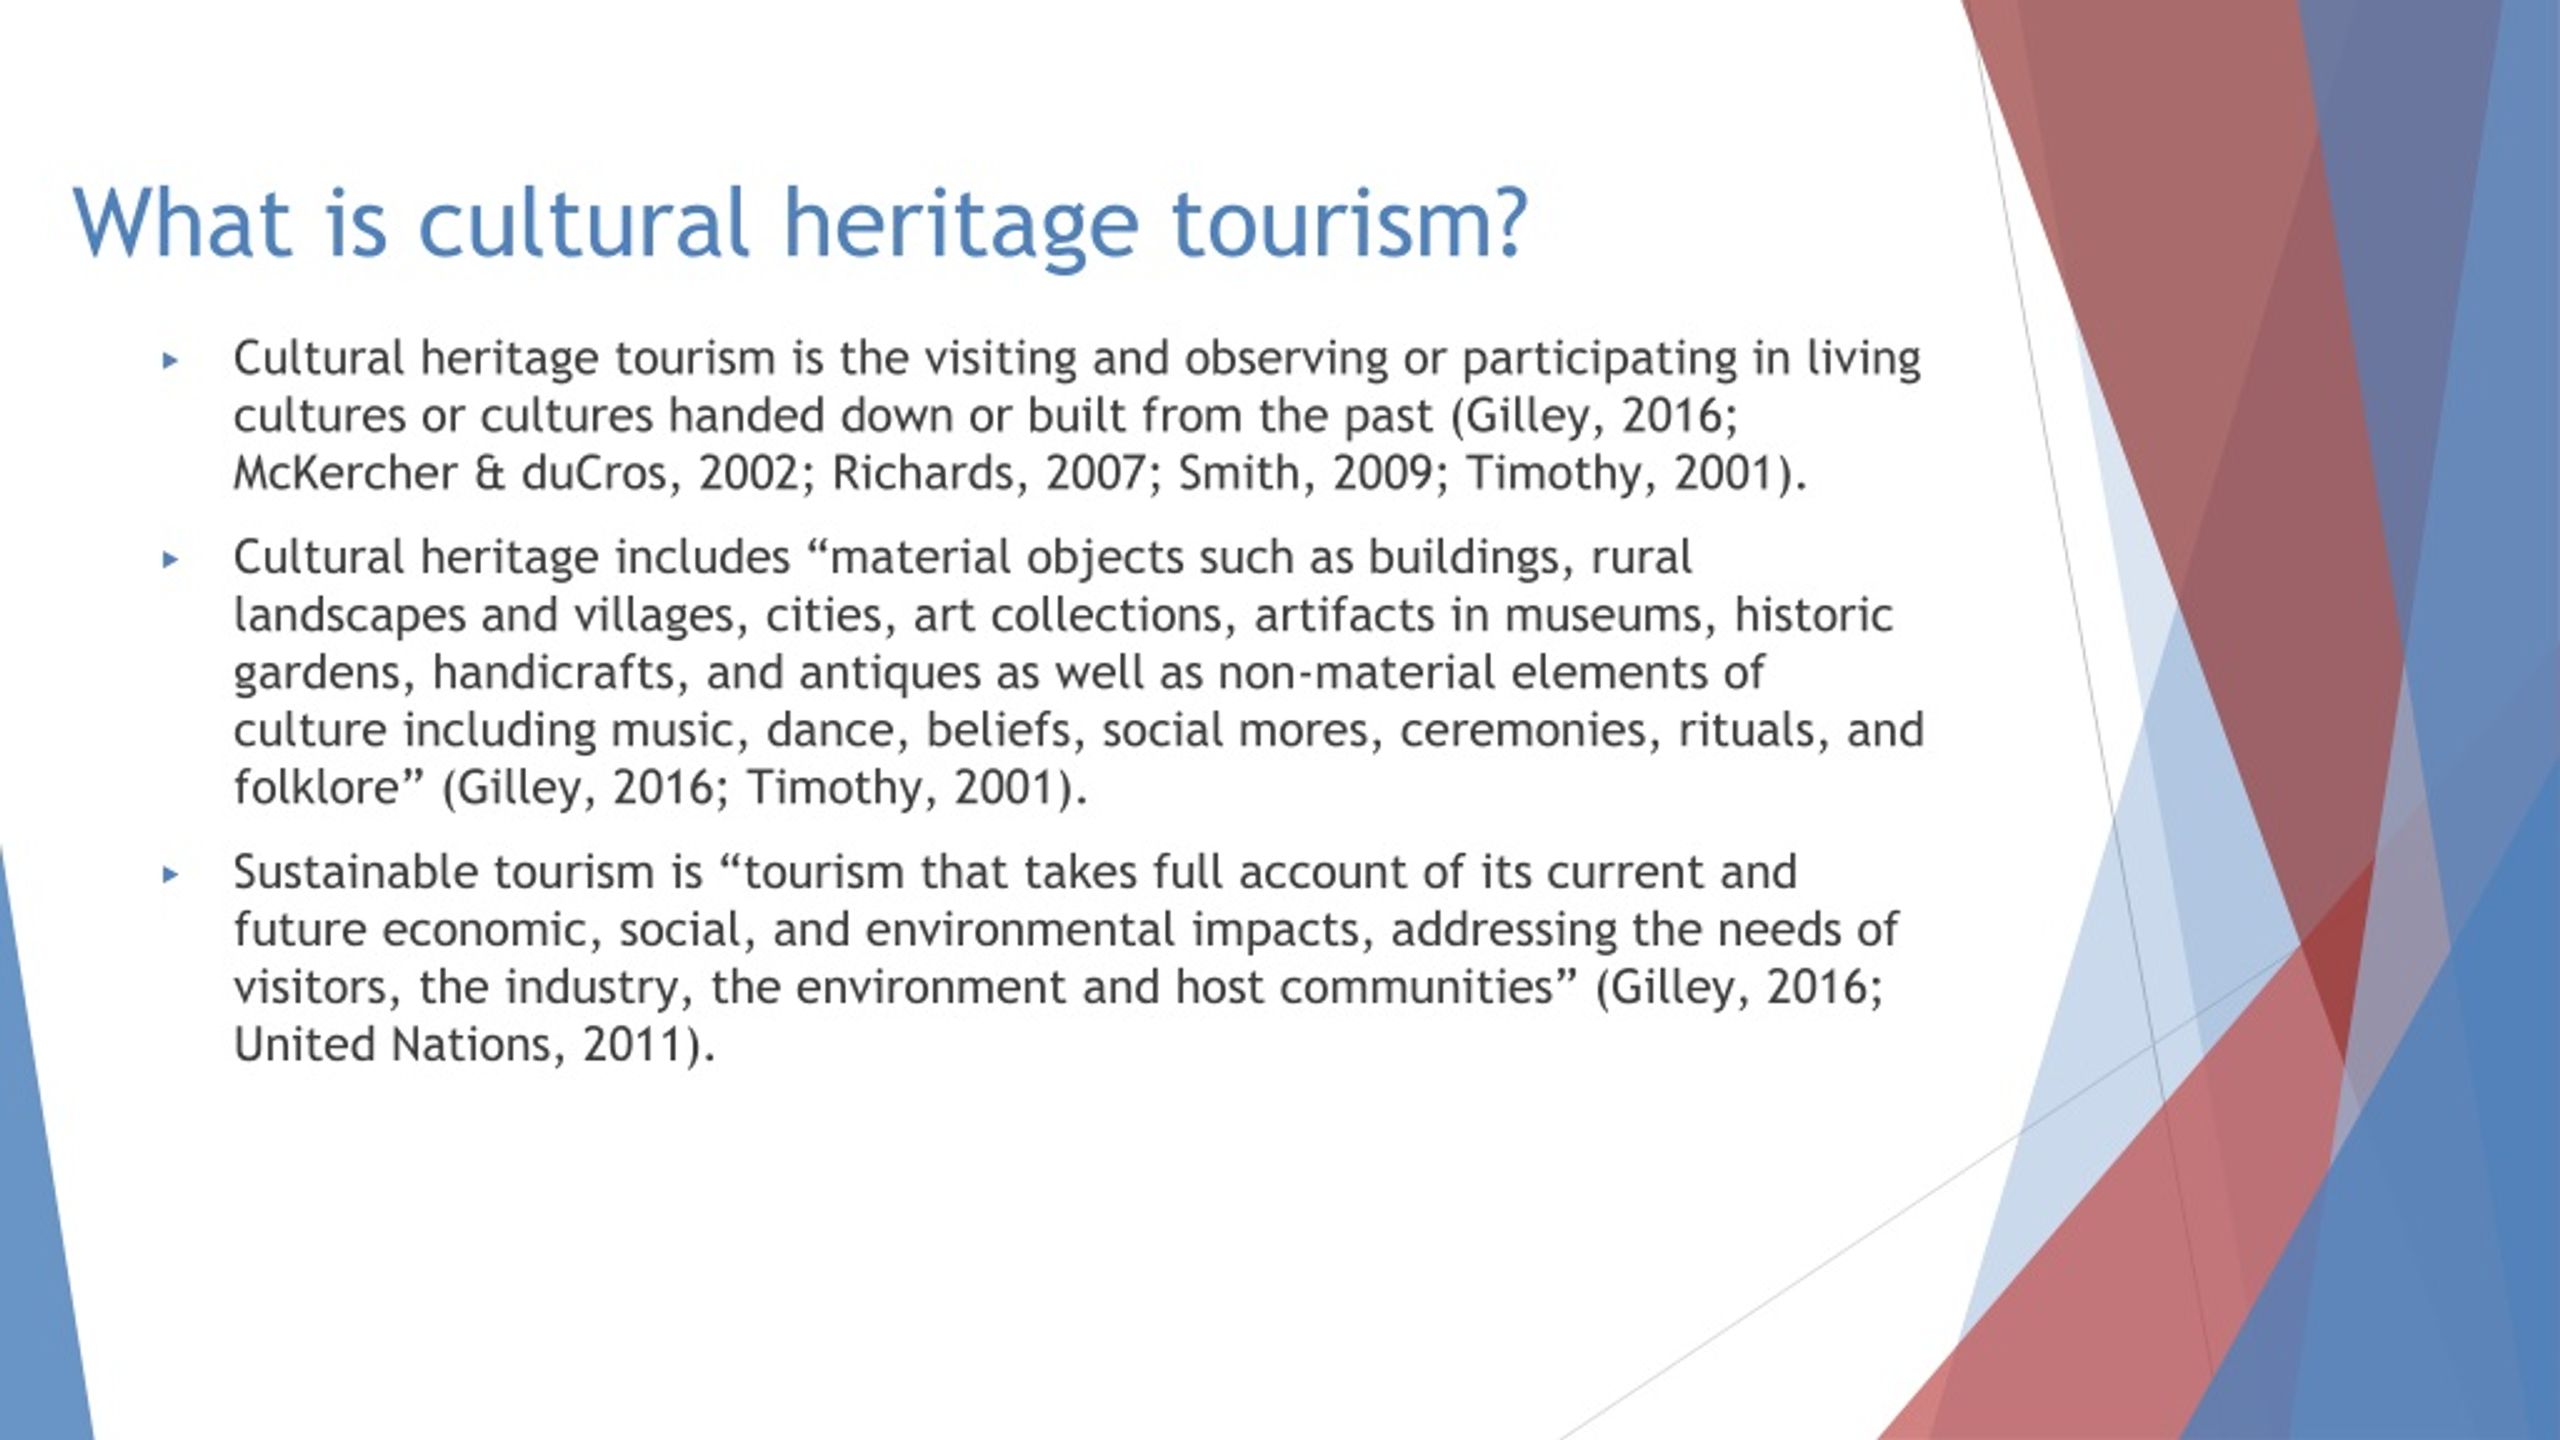 define cultural heritage tourism